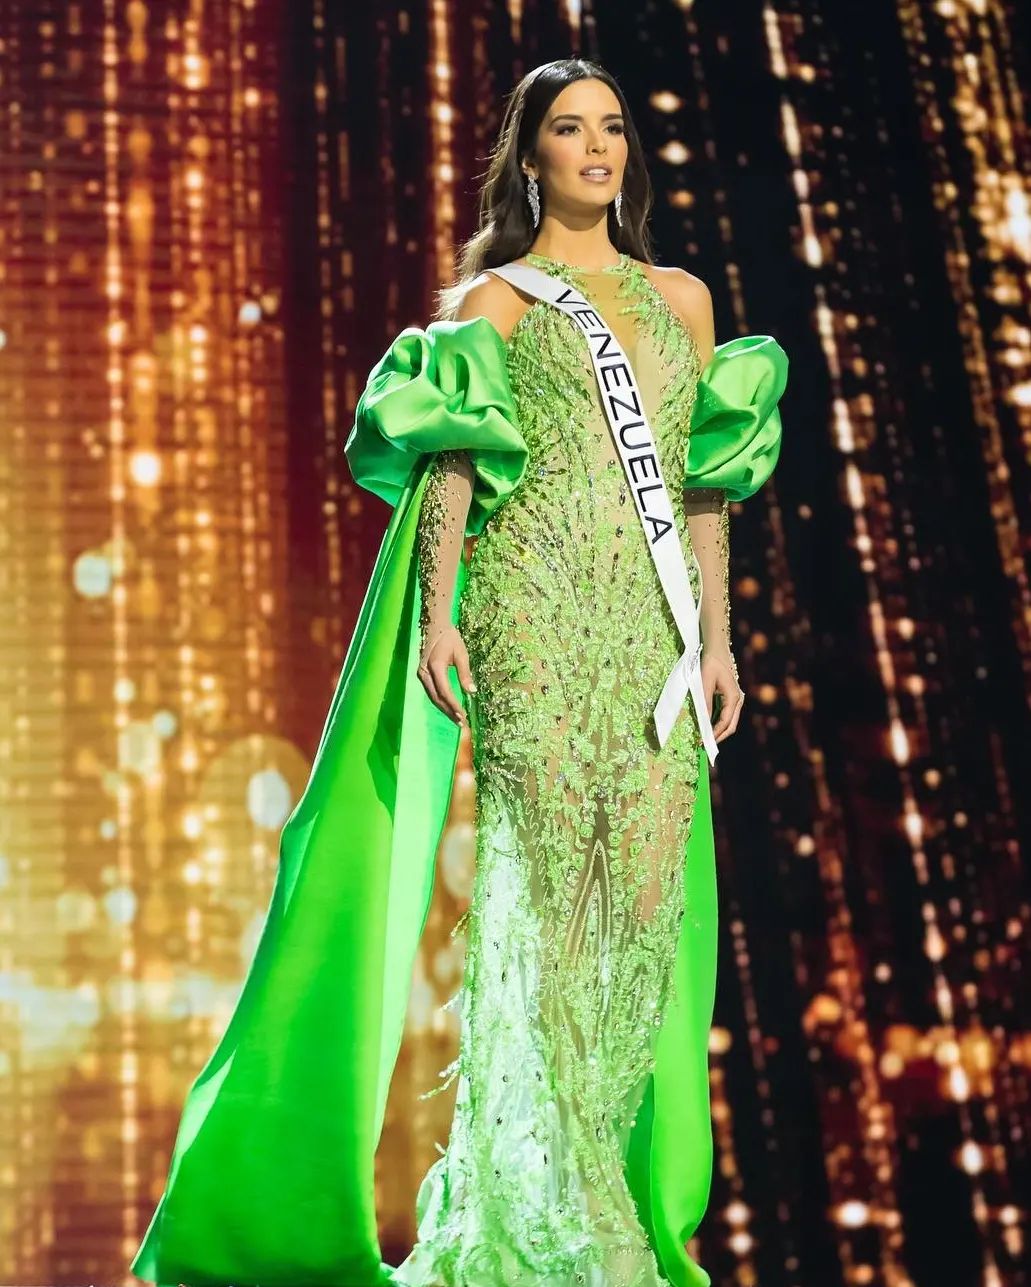 MissVenezuela2021 - amanda dudamel newman, 1st runner-up de miss universe 2022. - Página 40 33992812